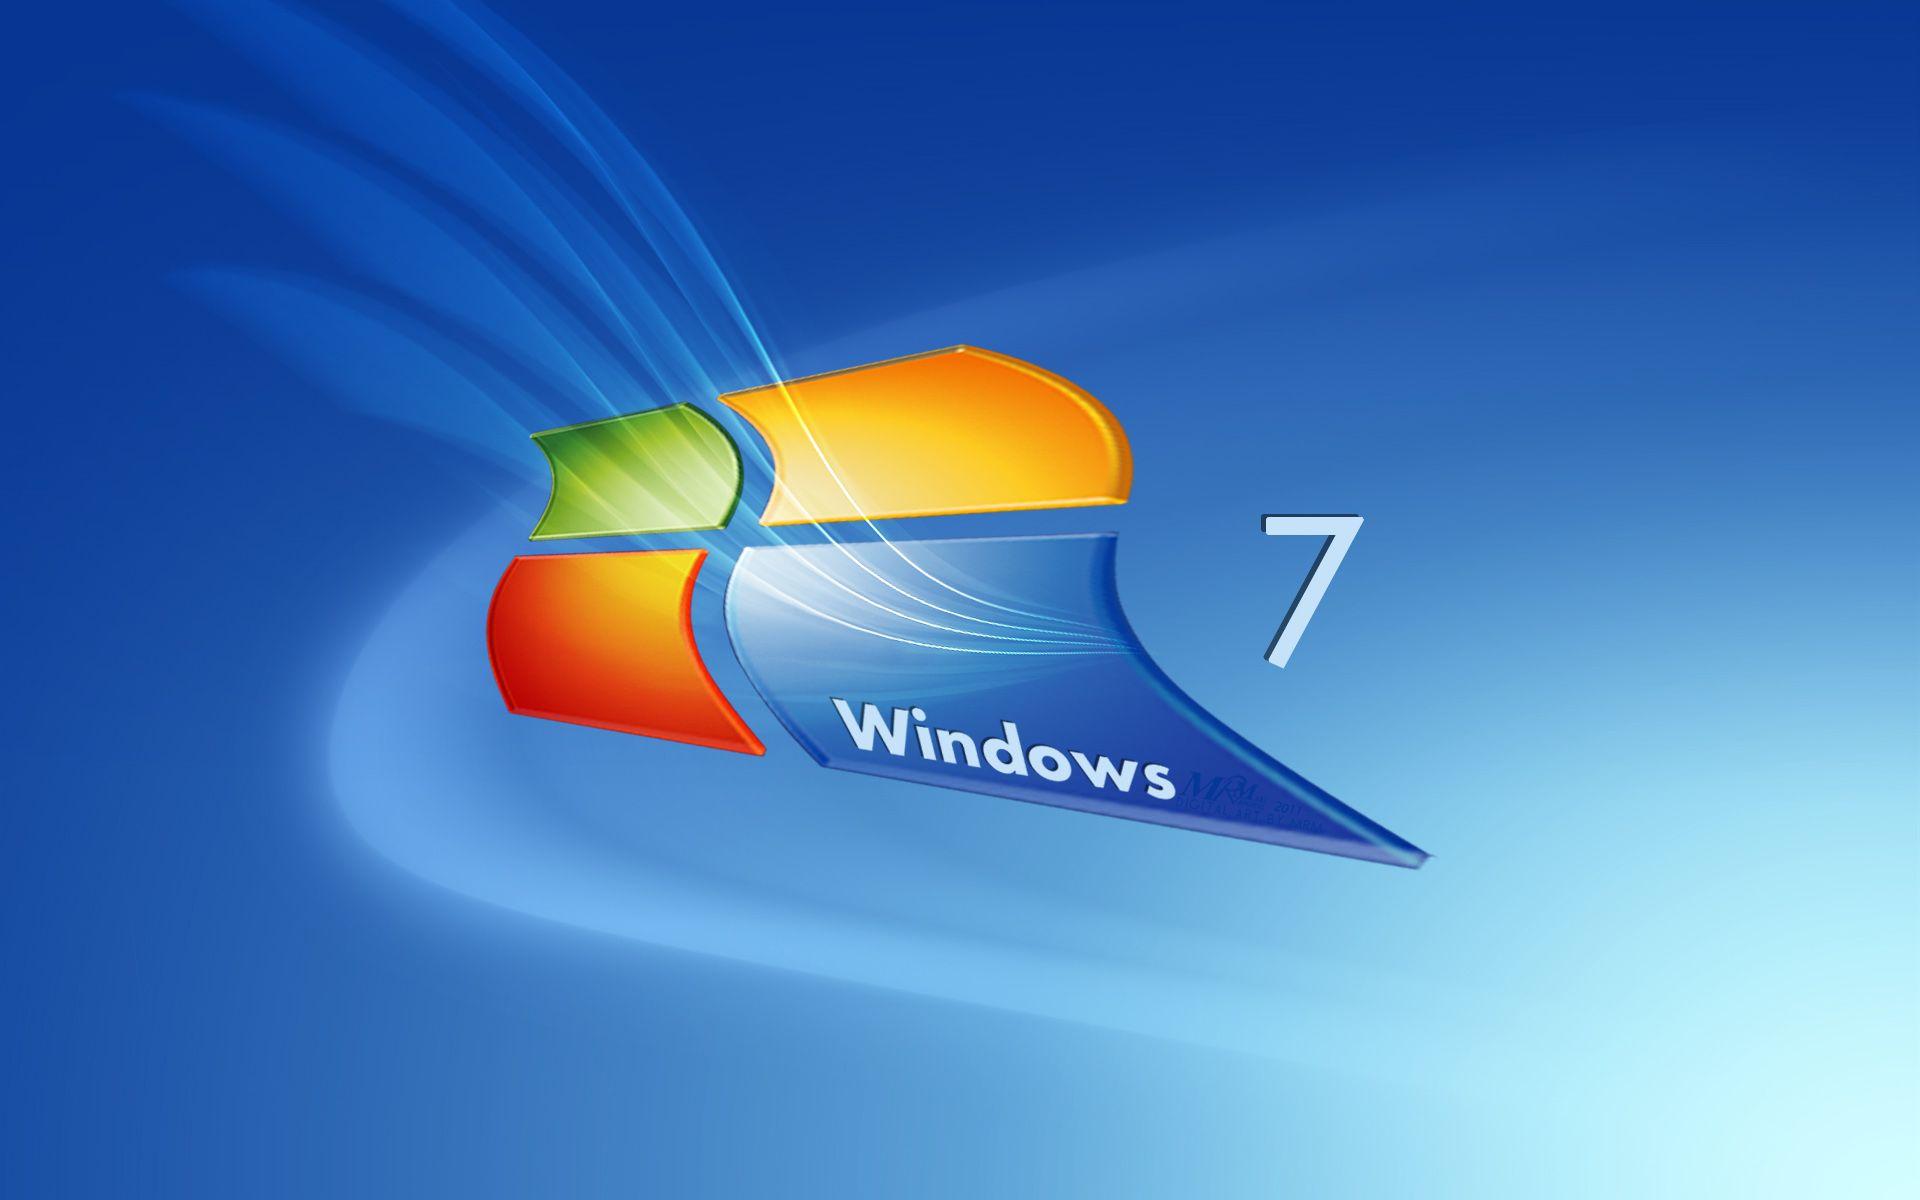 Windows 7 wallpaper. Windows wallpaper, Desktop